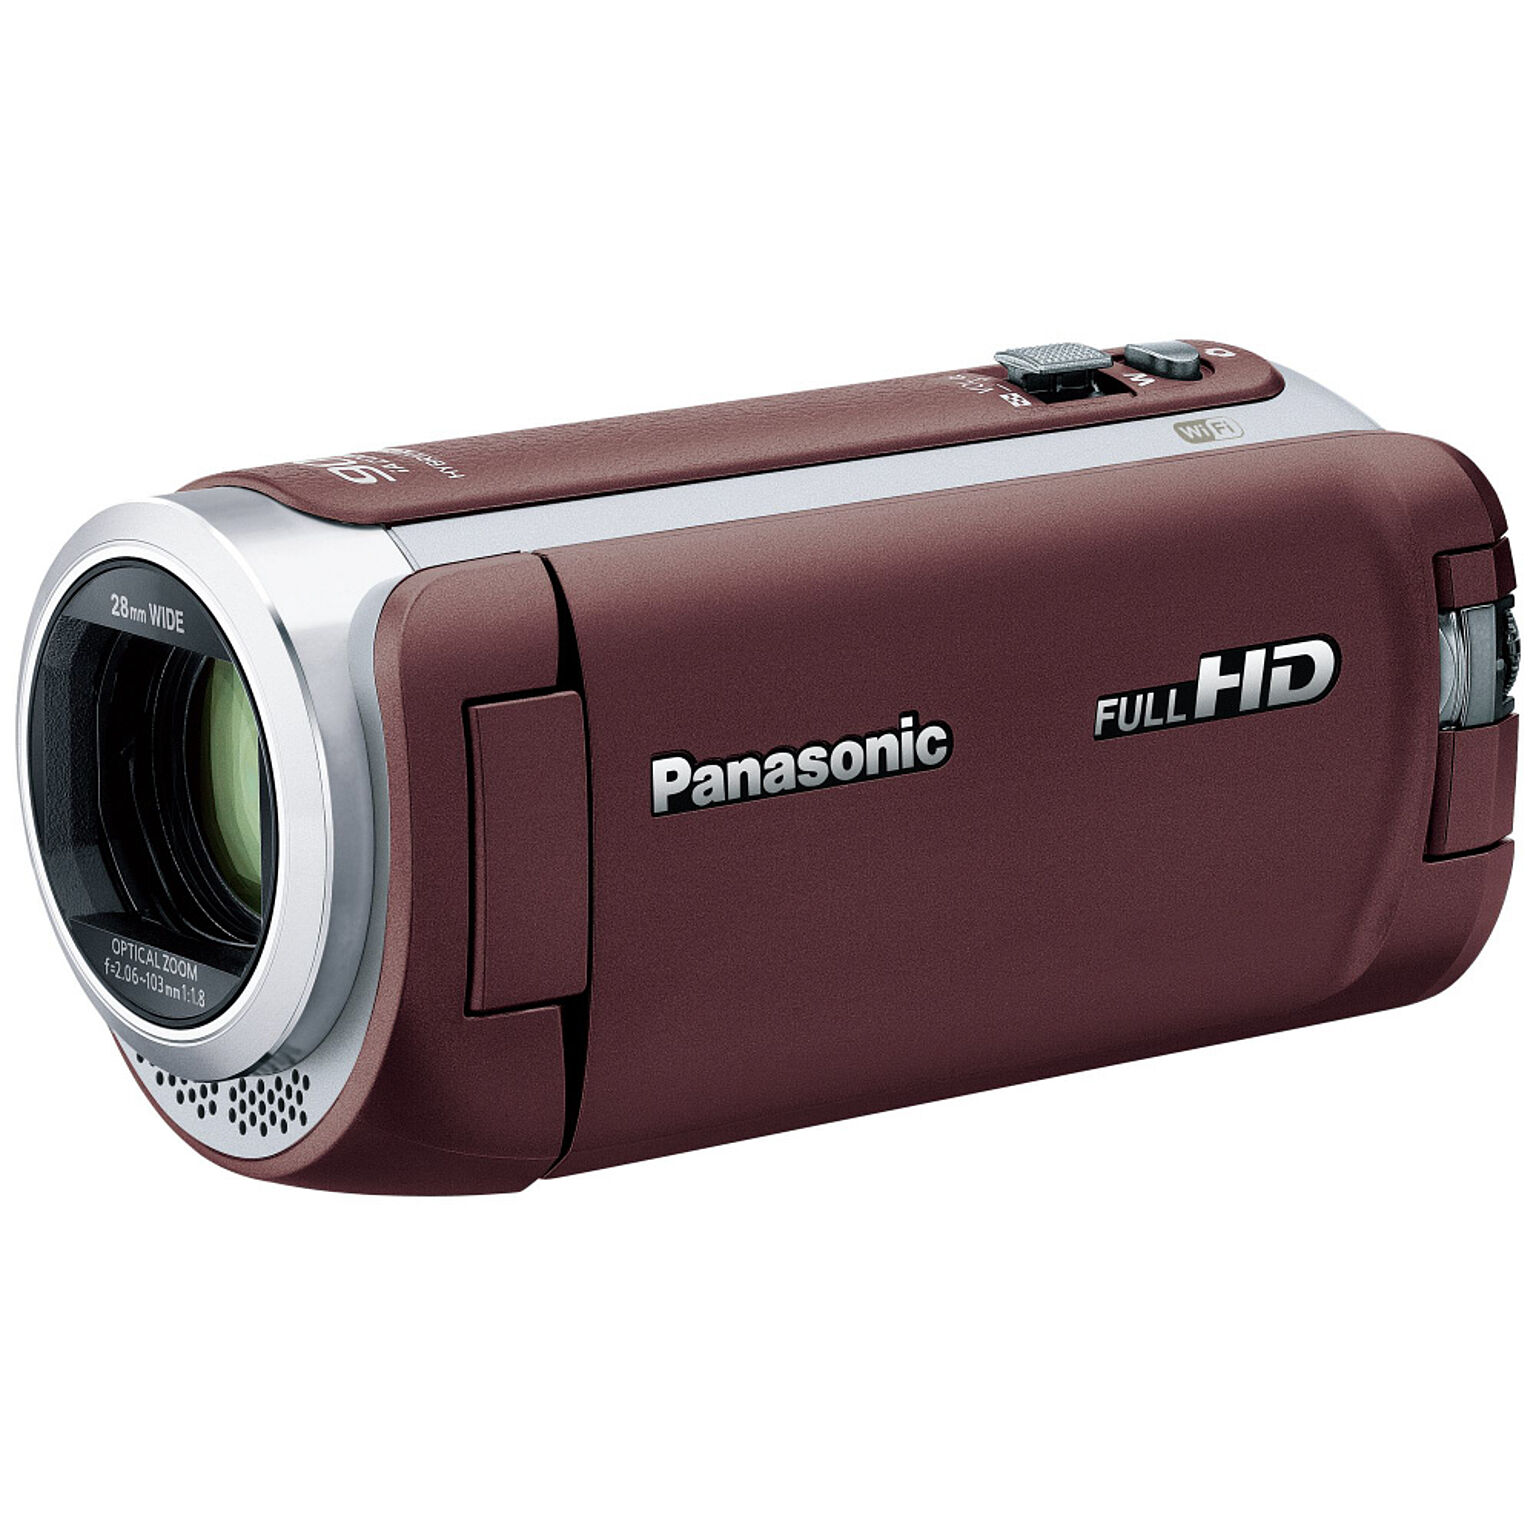 Panasonic(パナソニック) パナソニック HDビデオカメラ 64GB ワイプ撮り 高倍率90倍ズーム ブラウン HC-W590MS-T